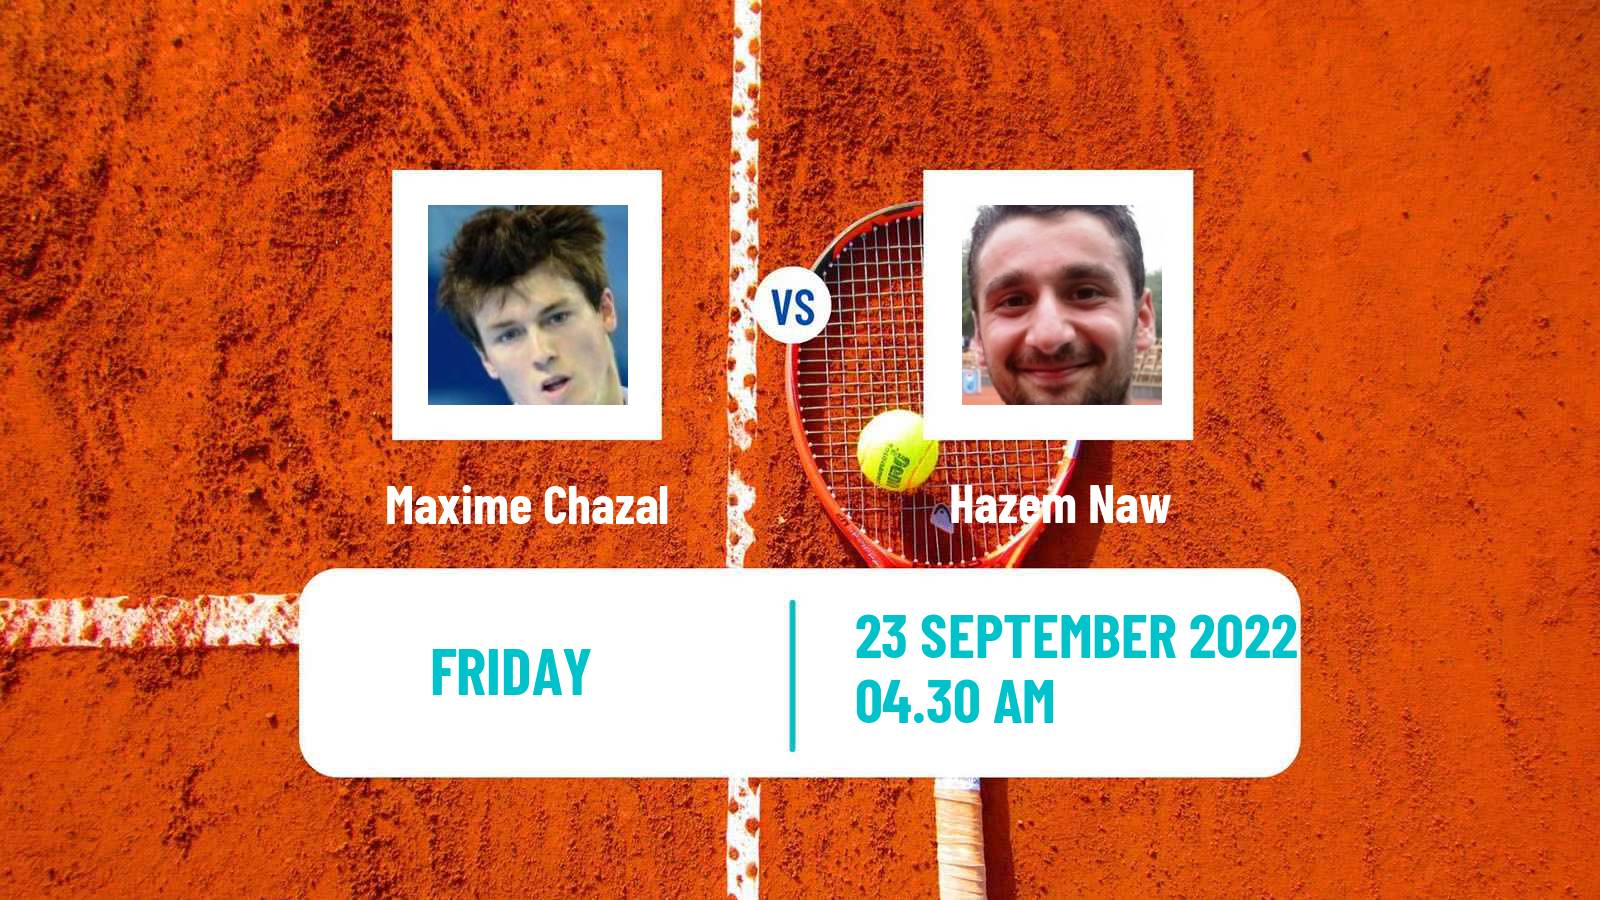 Tennis ITF Tournaments Maxime Chazal - Hazem Naw